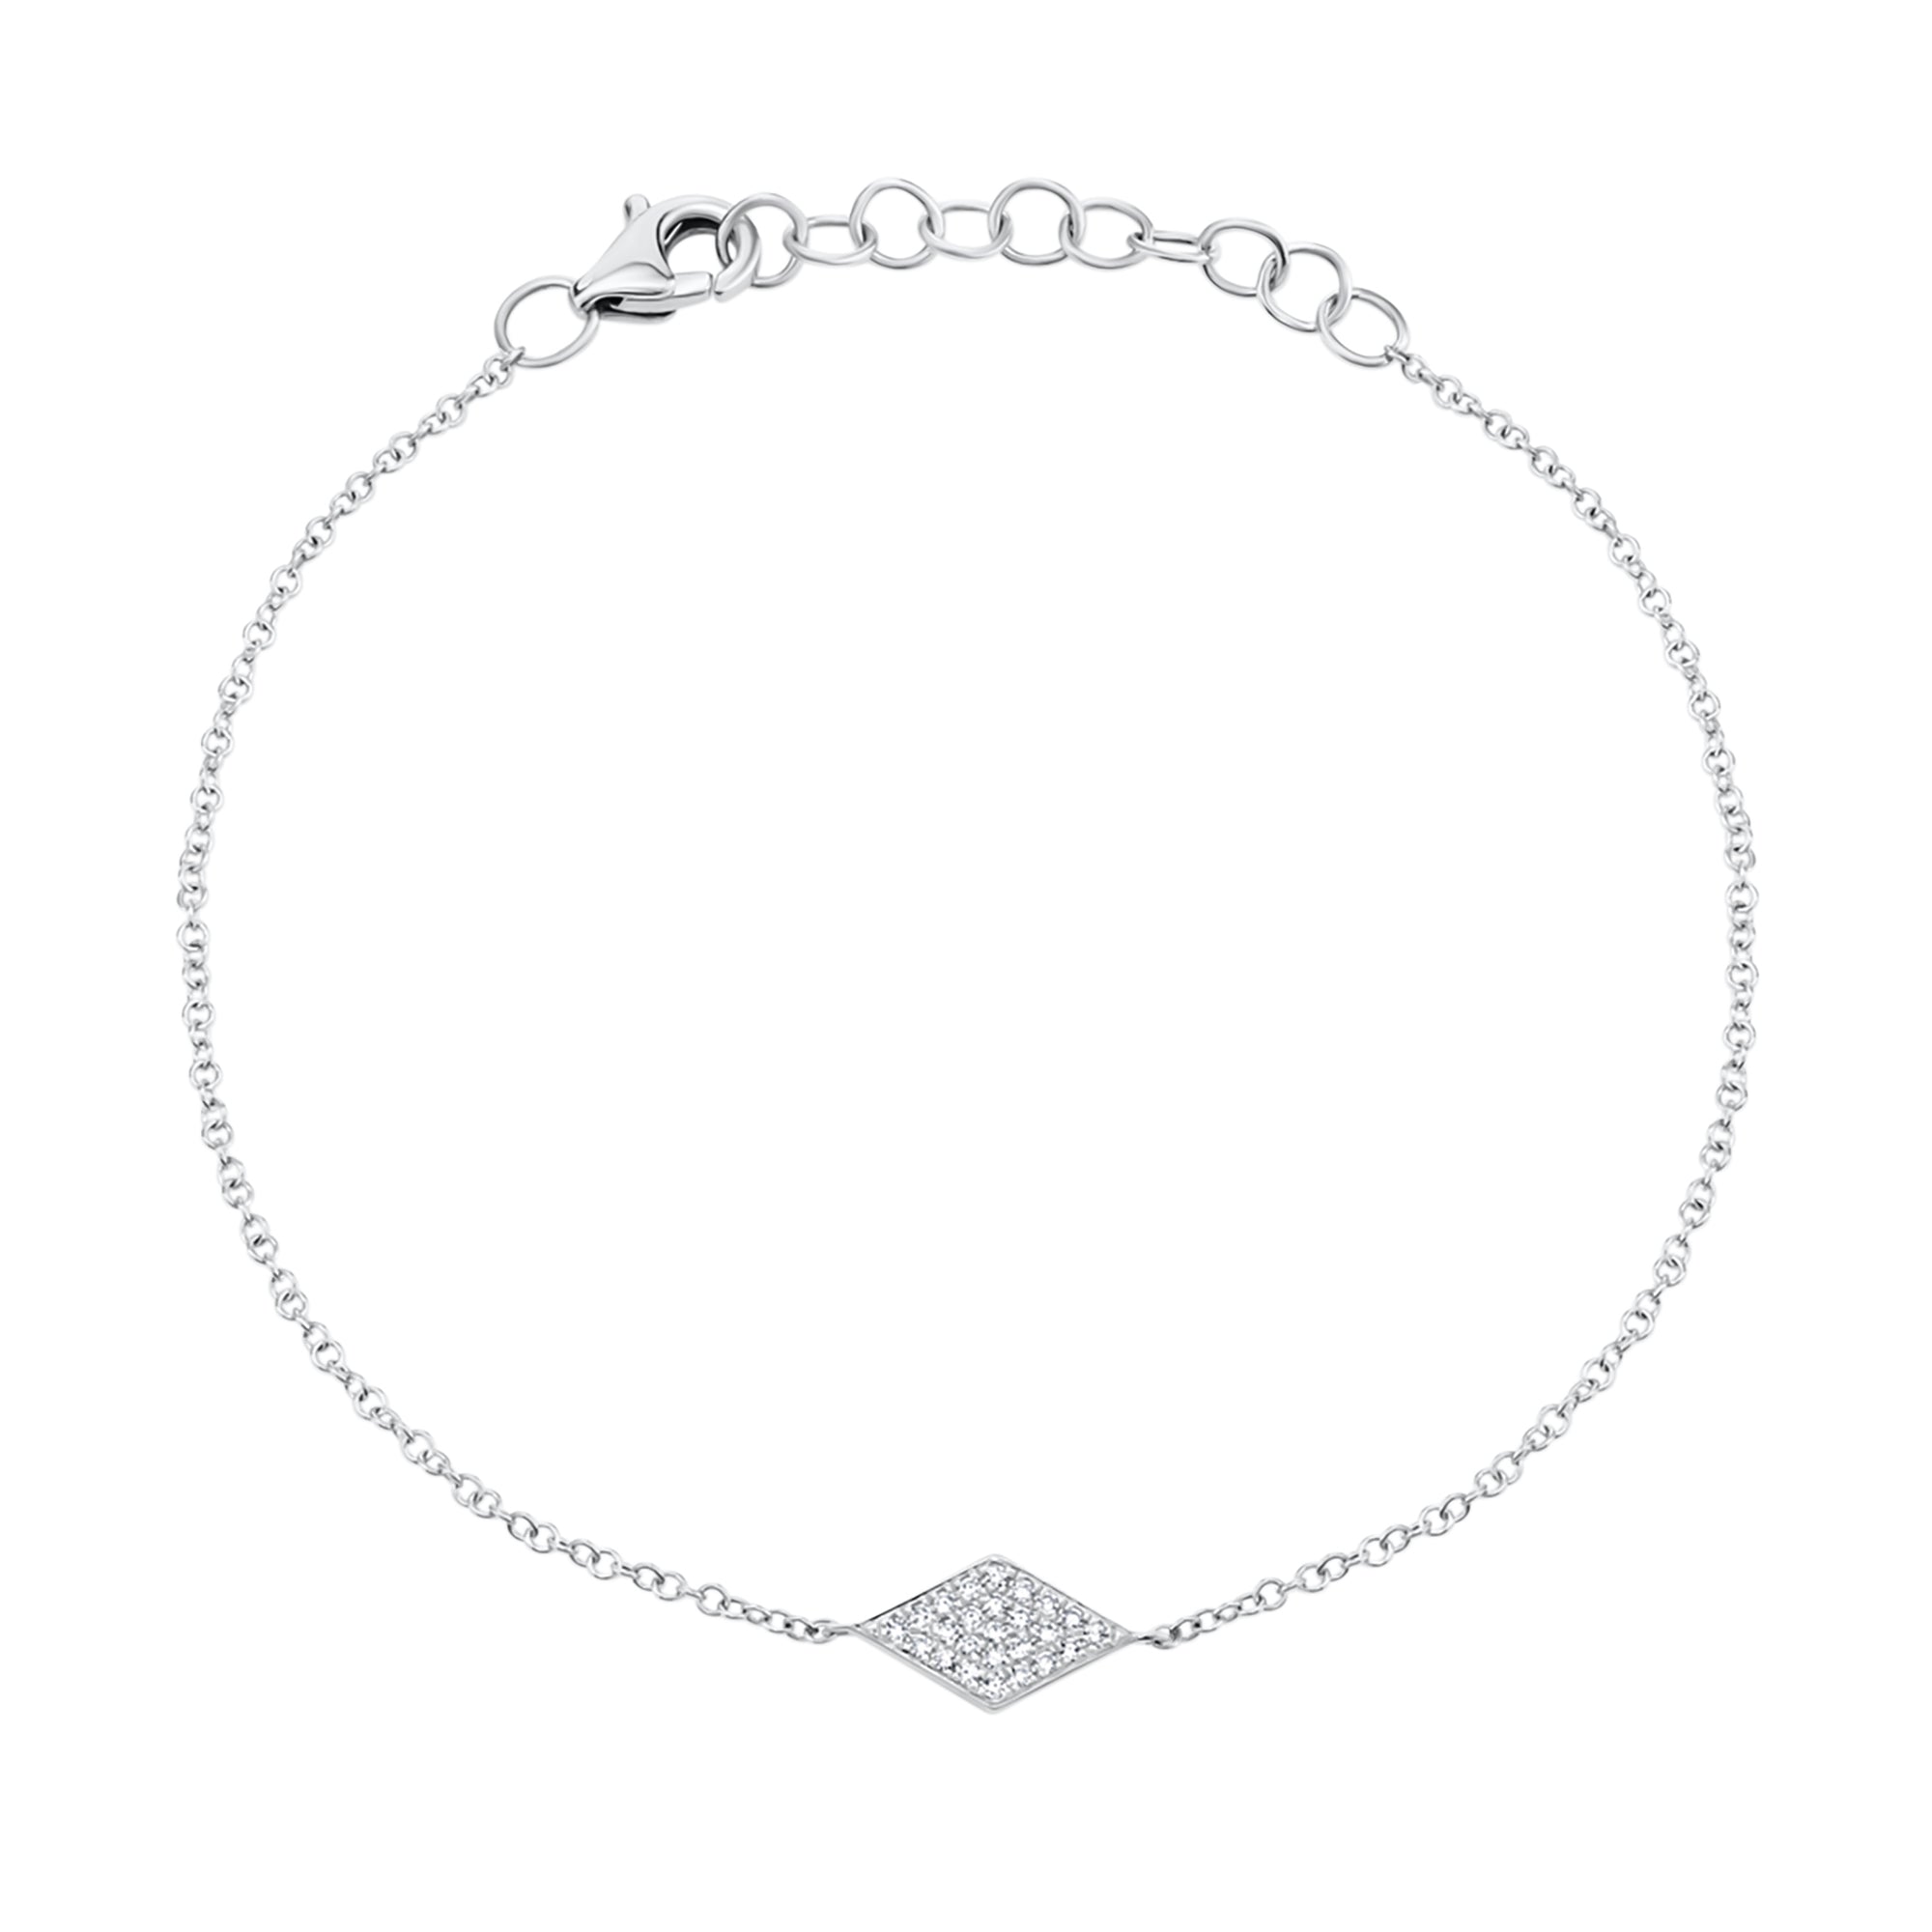 Diamond Shape Fashion Bracelet - 14K white gold weighing 1.10 grams - 0.06 cts round diamonds